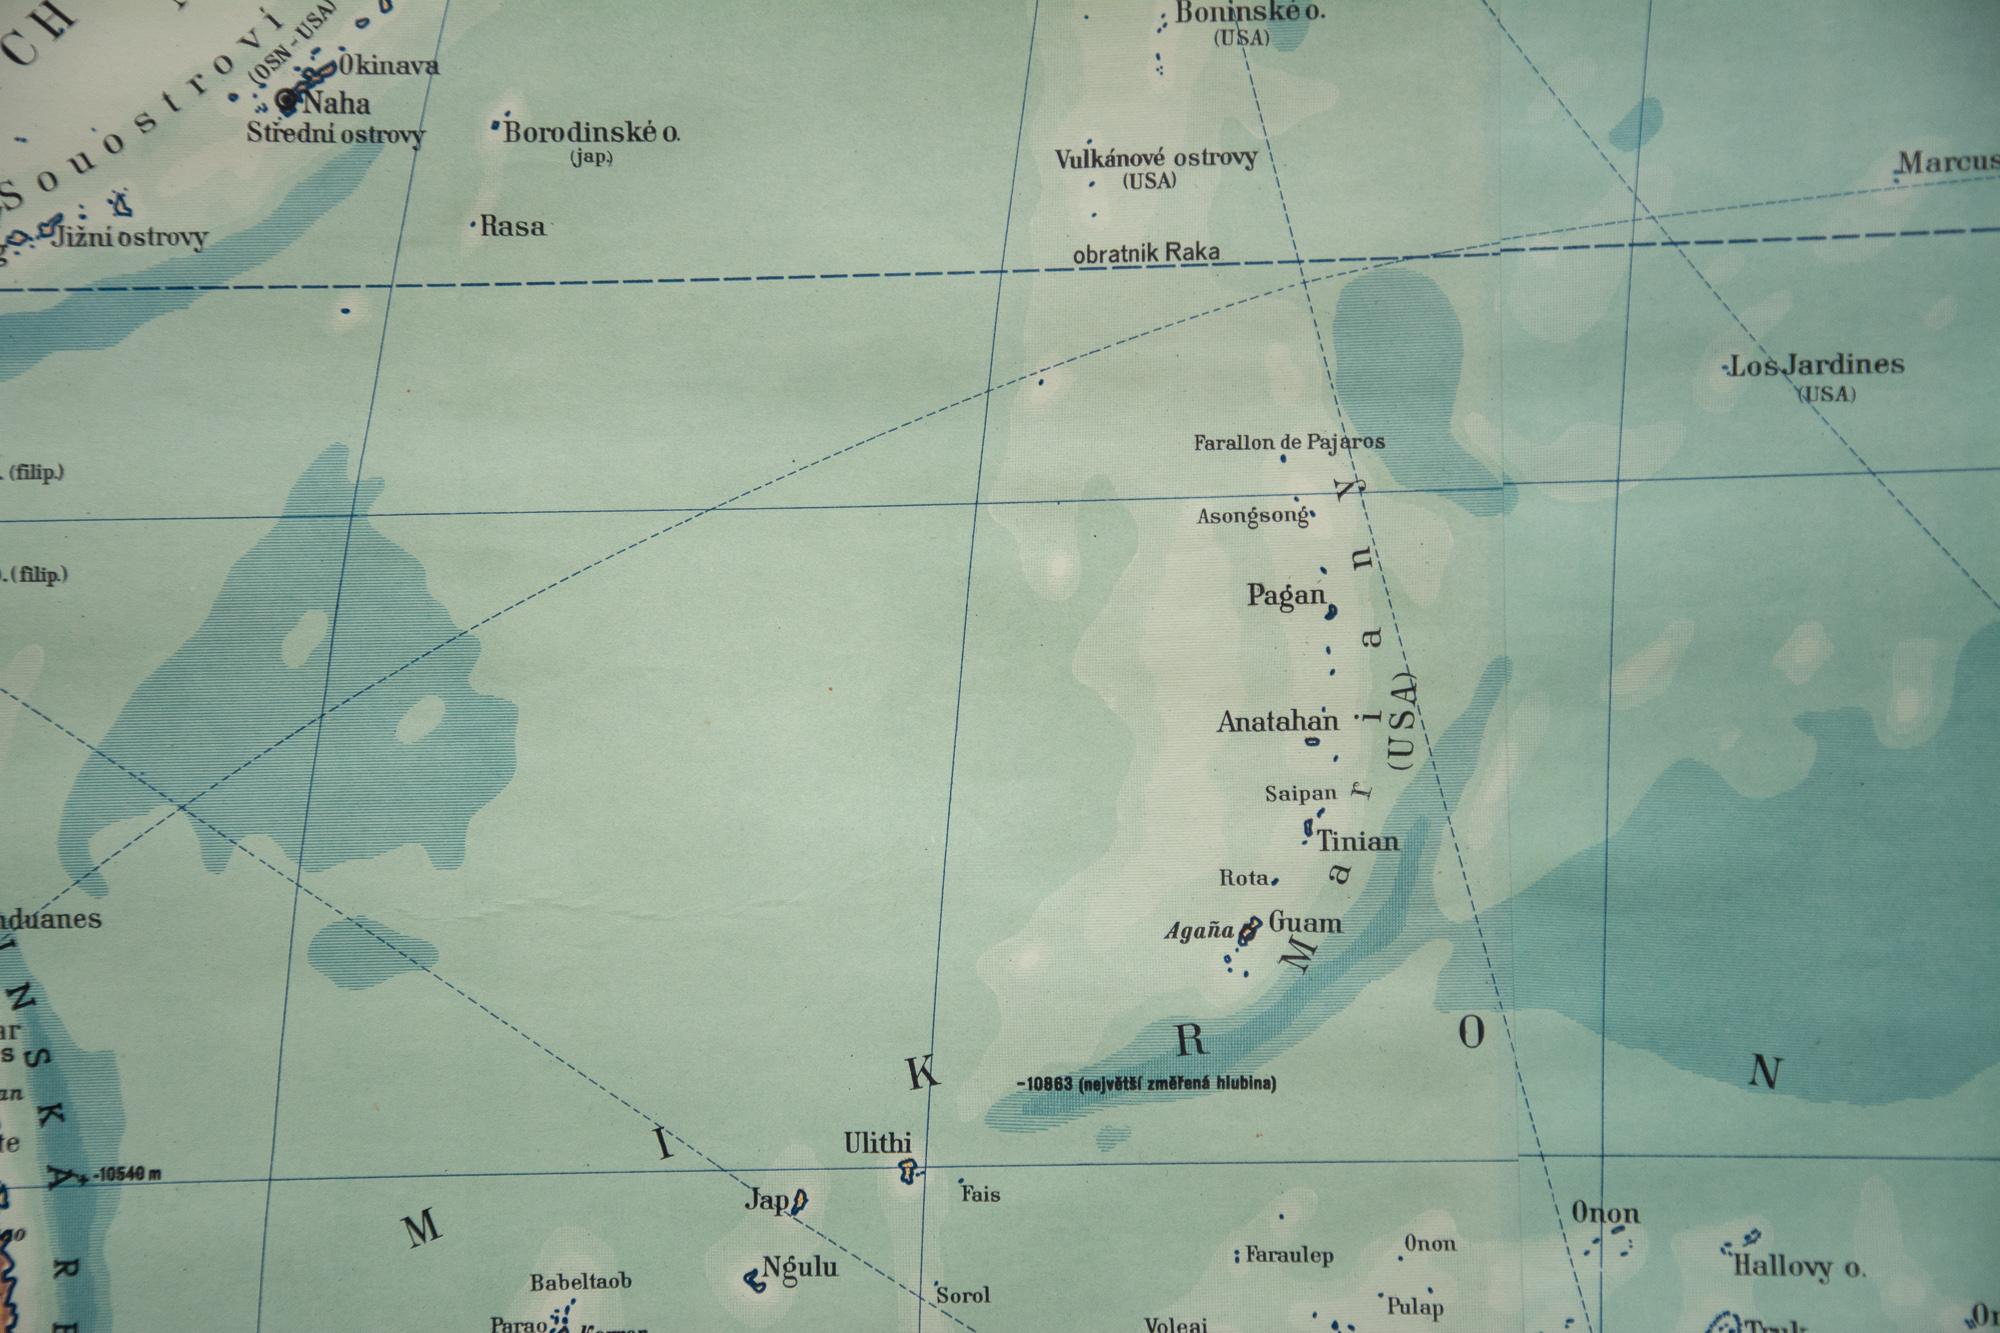 Czechoslovak Vintage School Maps of Australia and Oceania, 1955 1